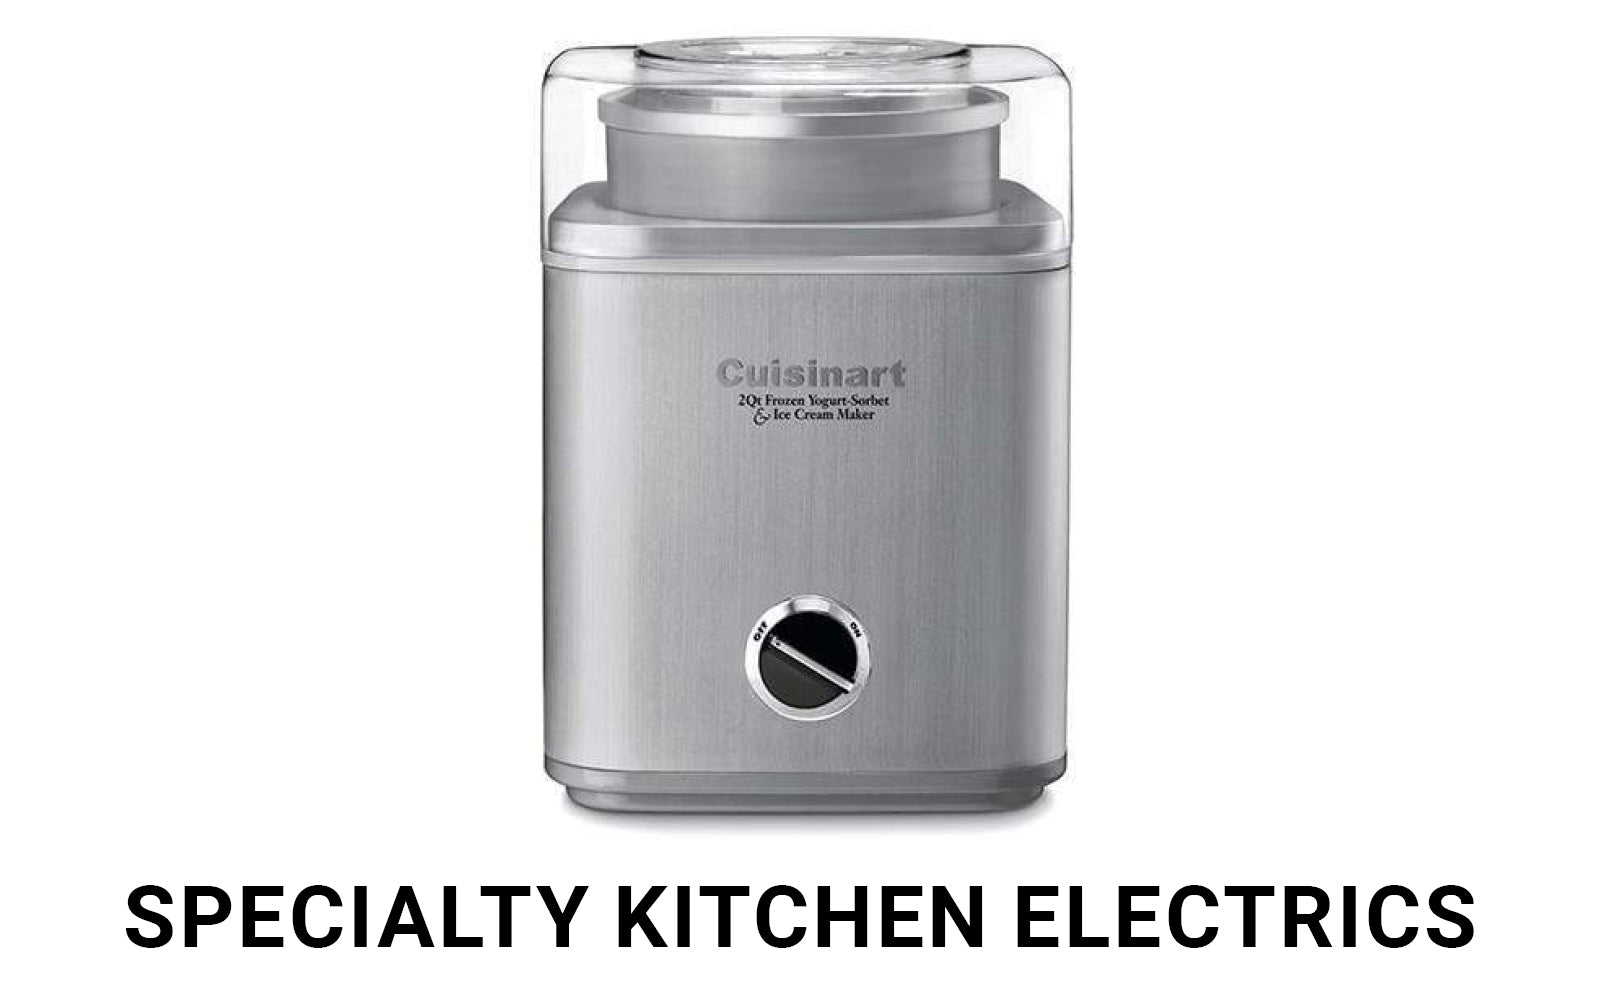 Specialty Kitchen Electrics